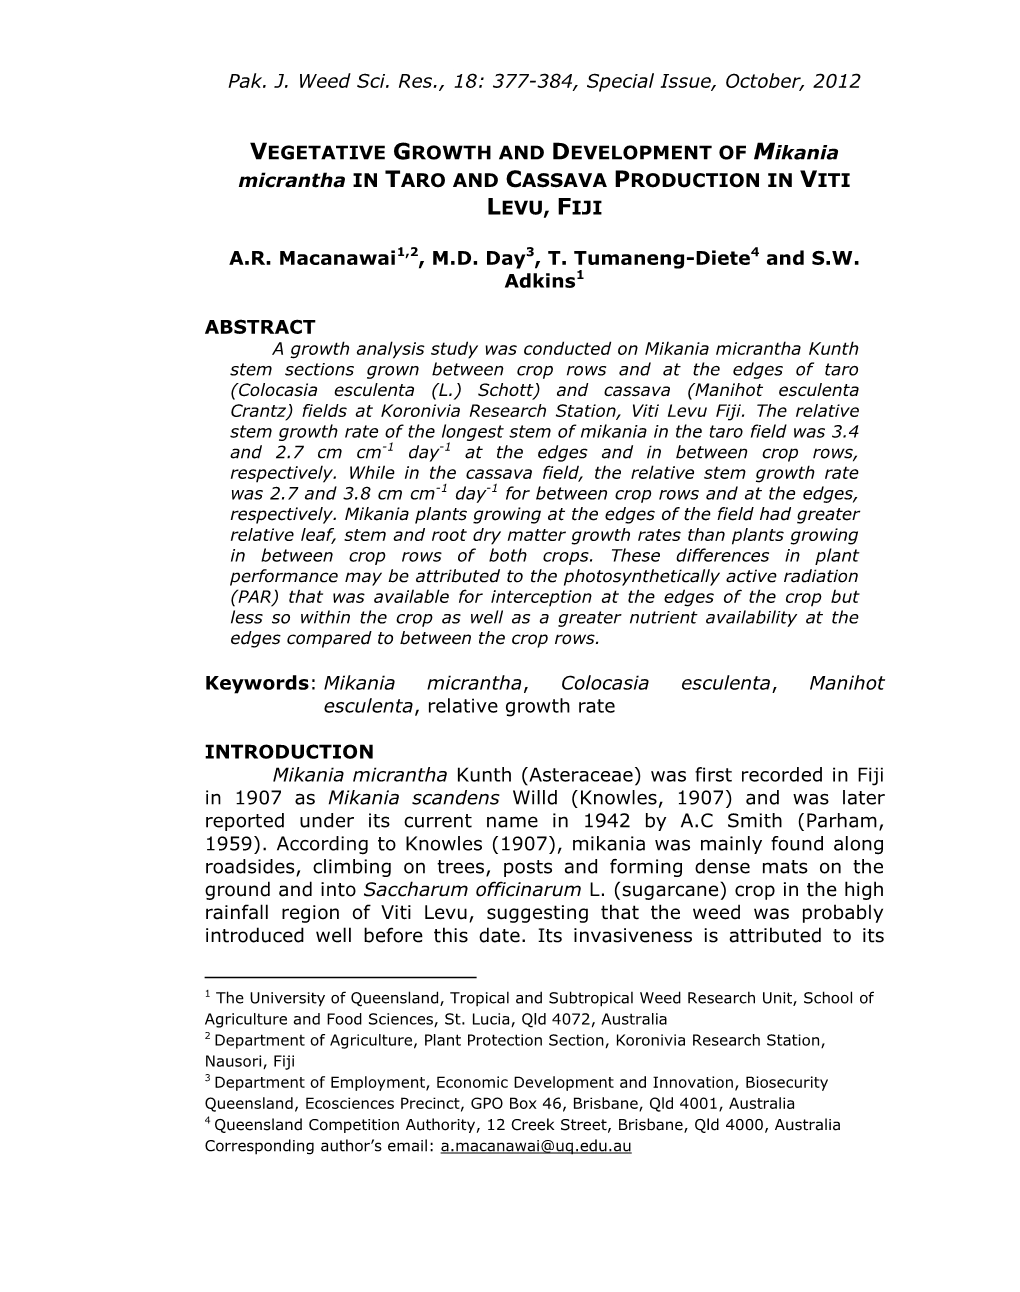 VEGETATIVE GROWTH and DEVELOPMENT of Mikania Micrantha in TARO and CASSAVA PRODUCTION in VITI LEVU, FIJI